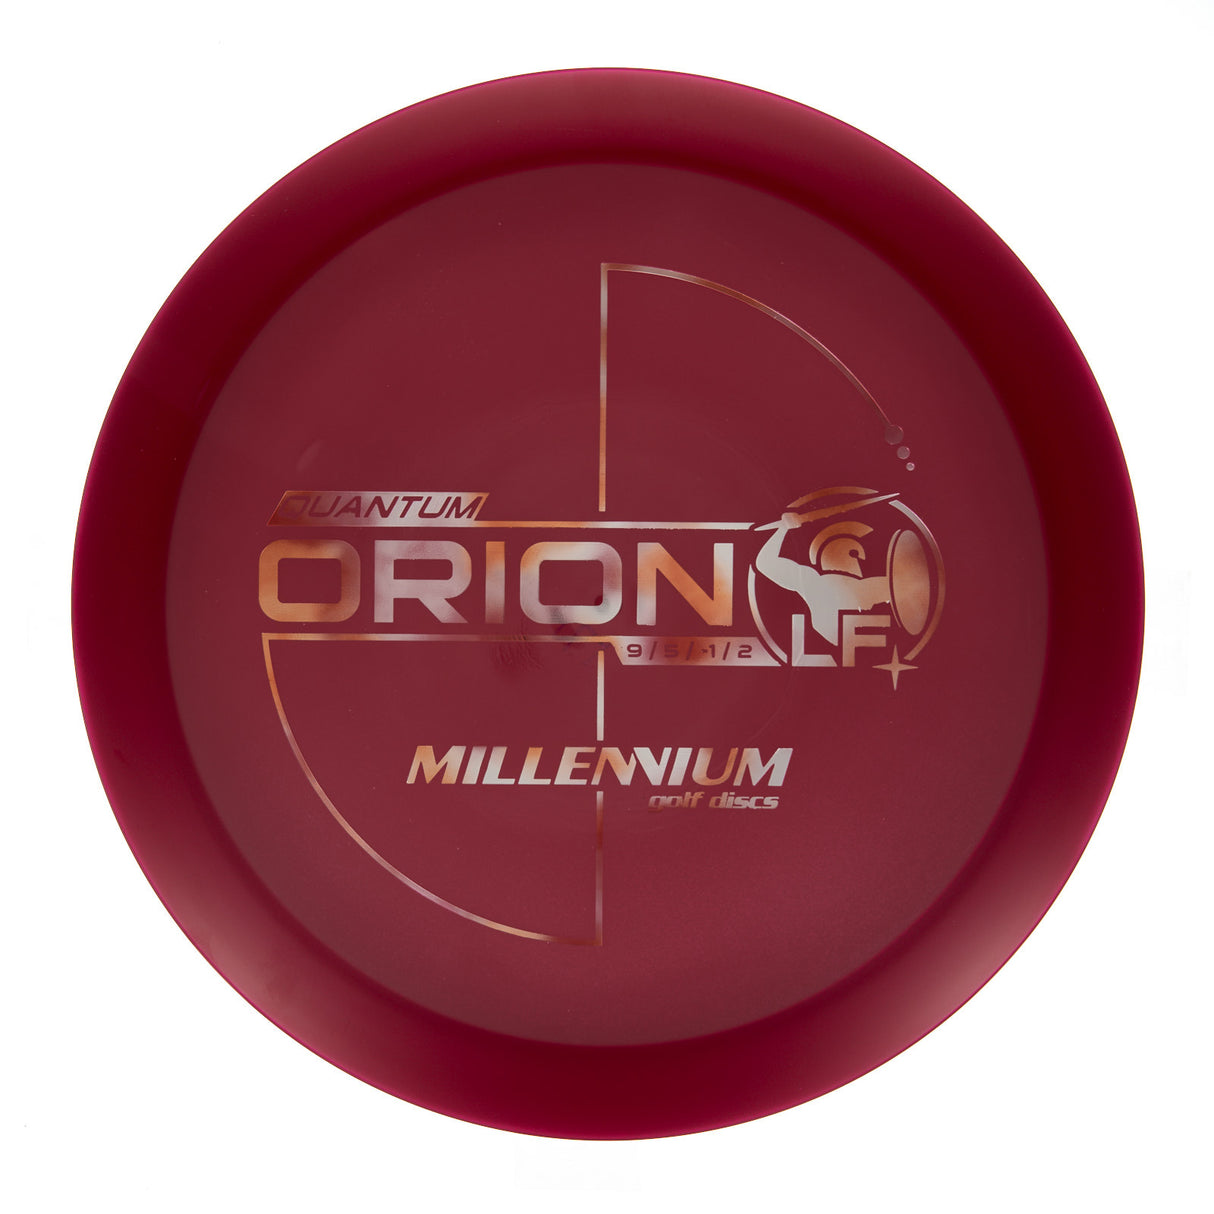 Millennium Orion LF - Quantum 172g | Style 0002